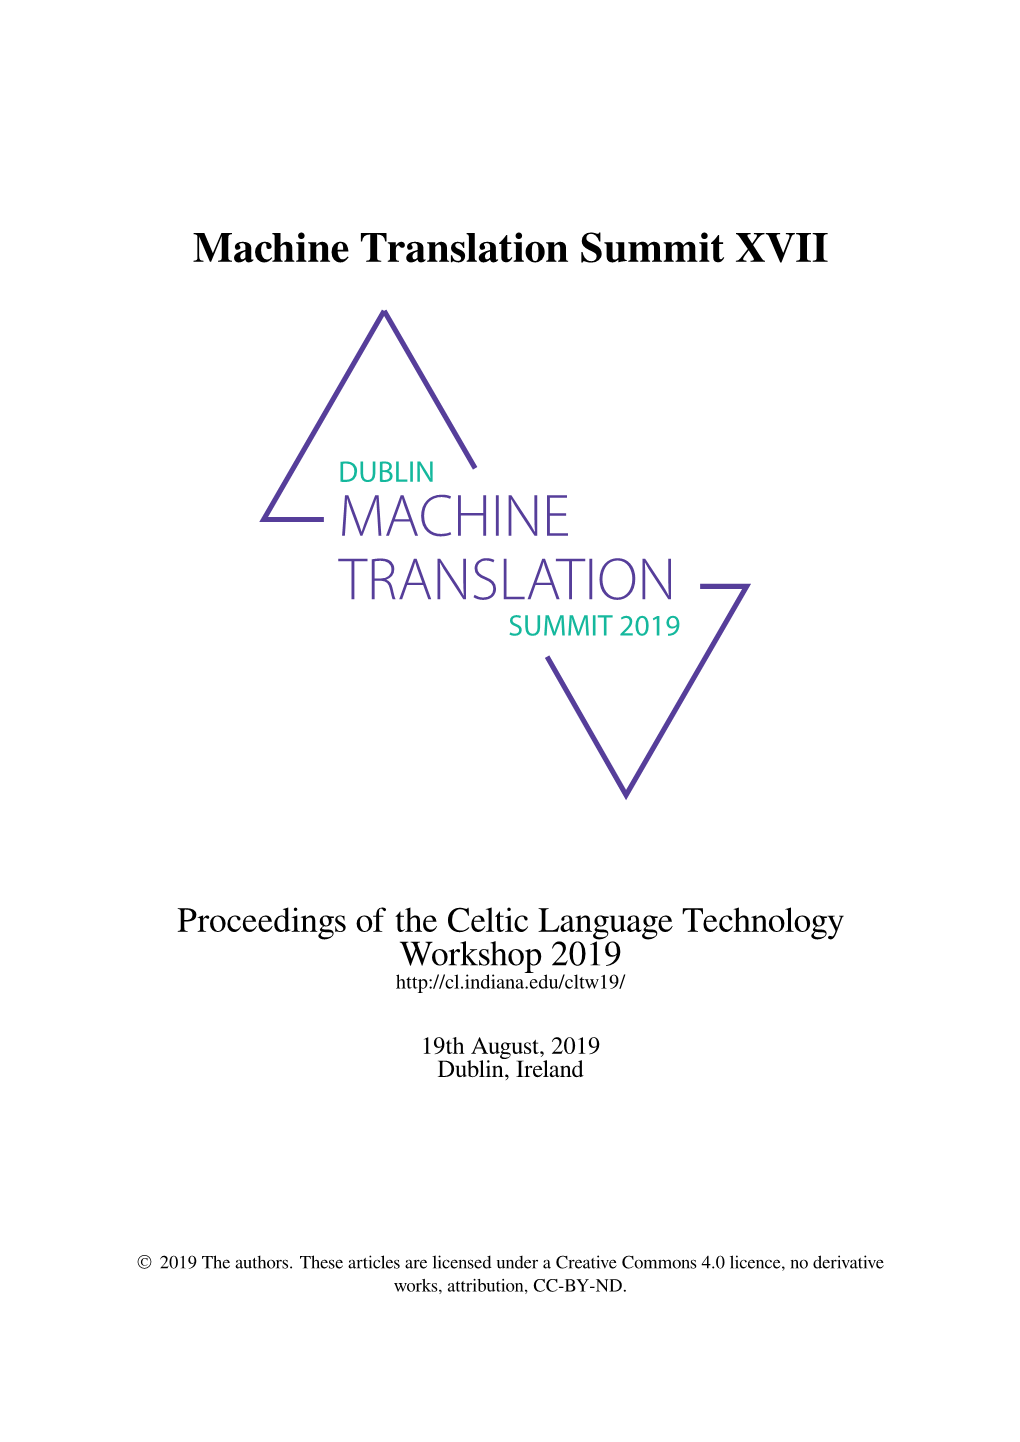 Proceedings of the Celtic Language Technology Workshop 2019